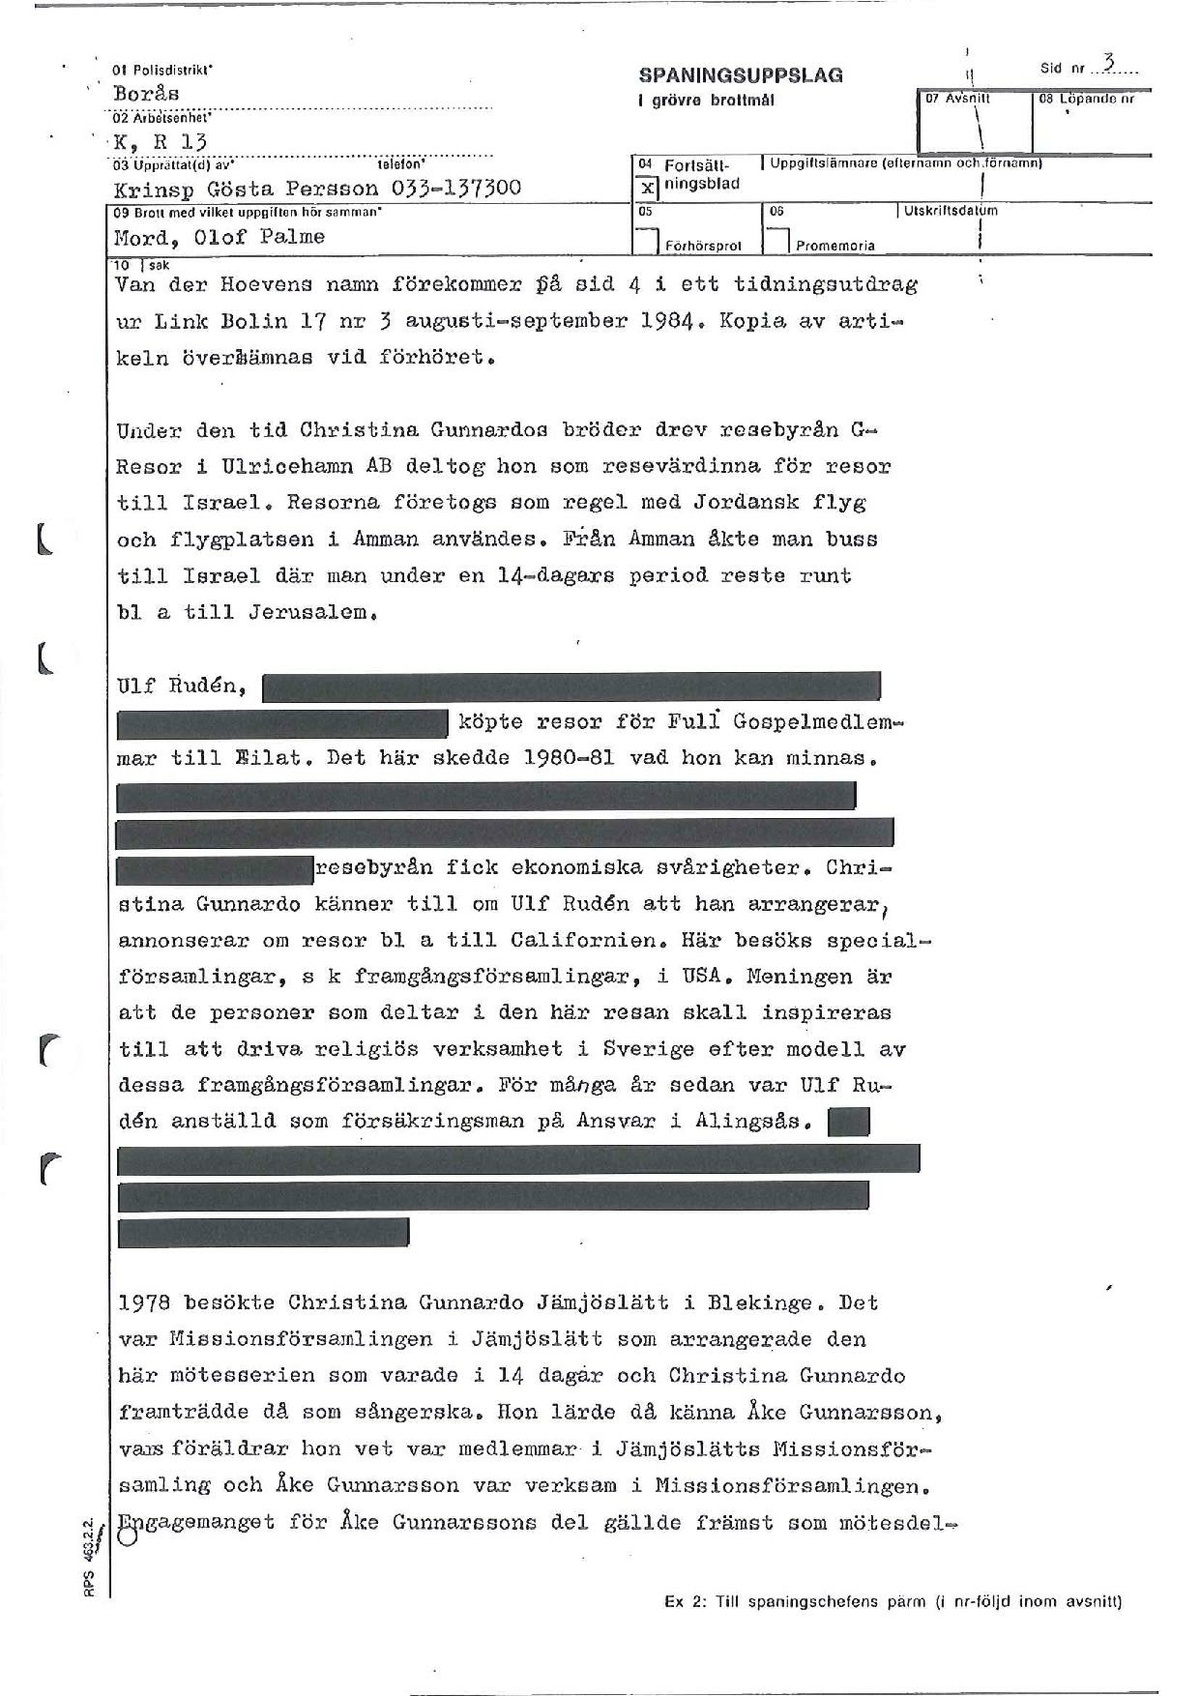 Pol-1986-03-15 N2942-00 Förhör-Christina gunnardo-VG-reseledare.pdf